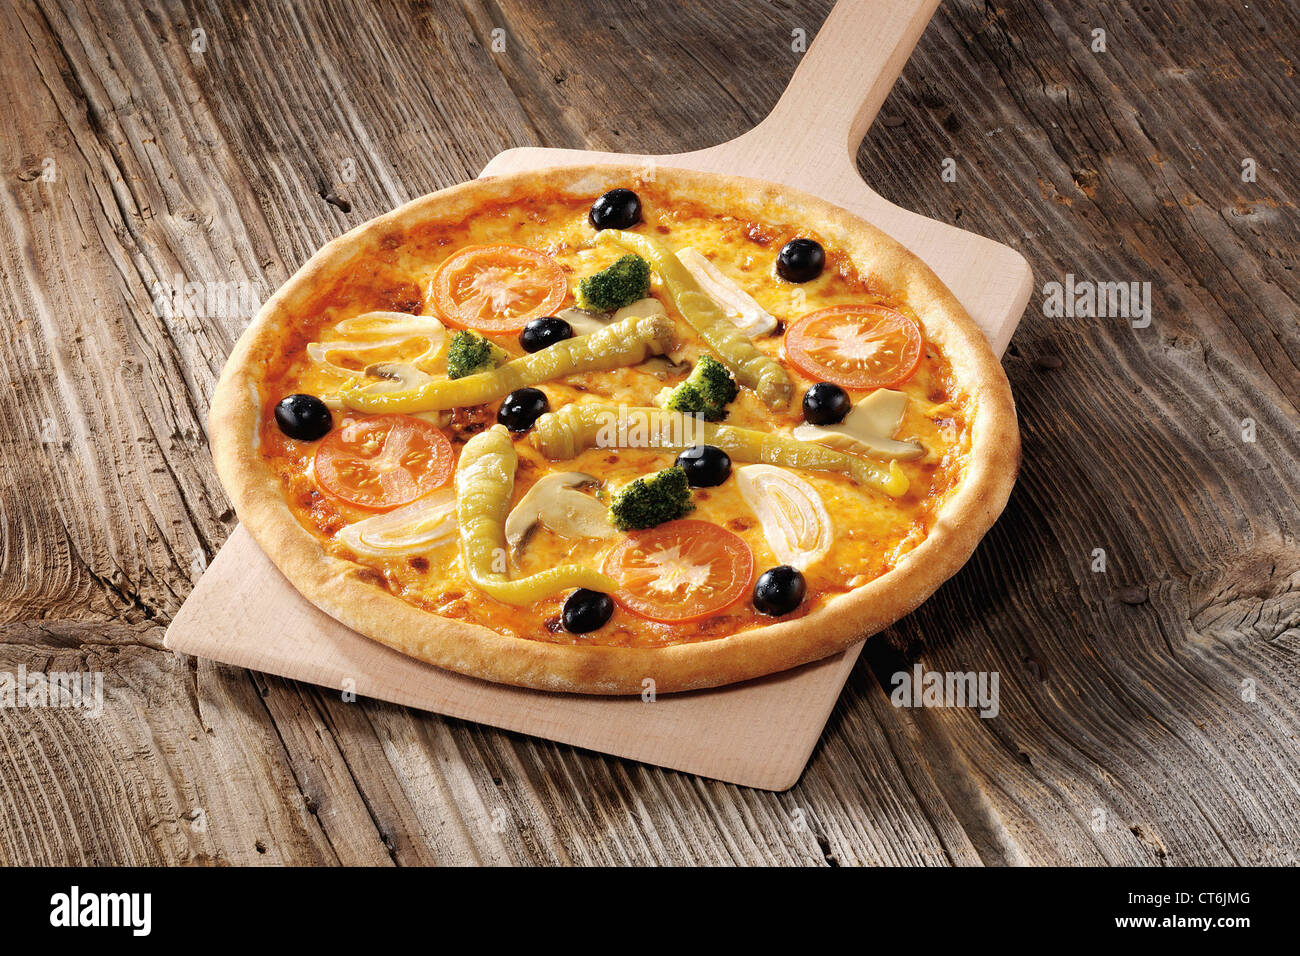 Pizza on slide Stock Photo - Alamy